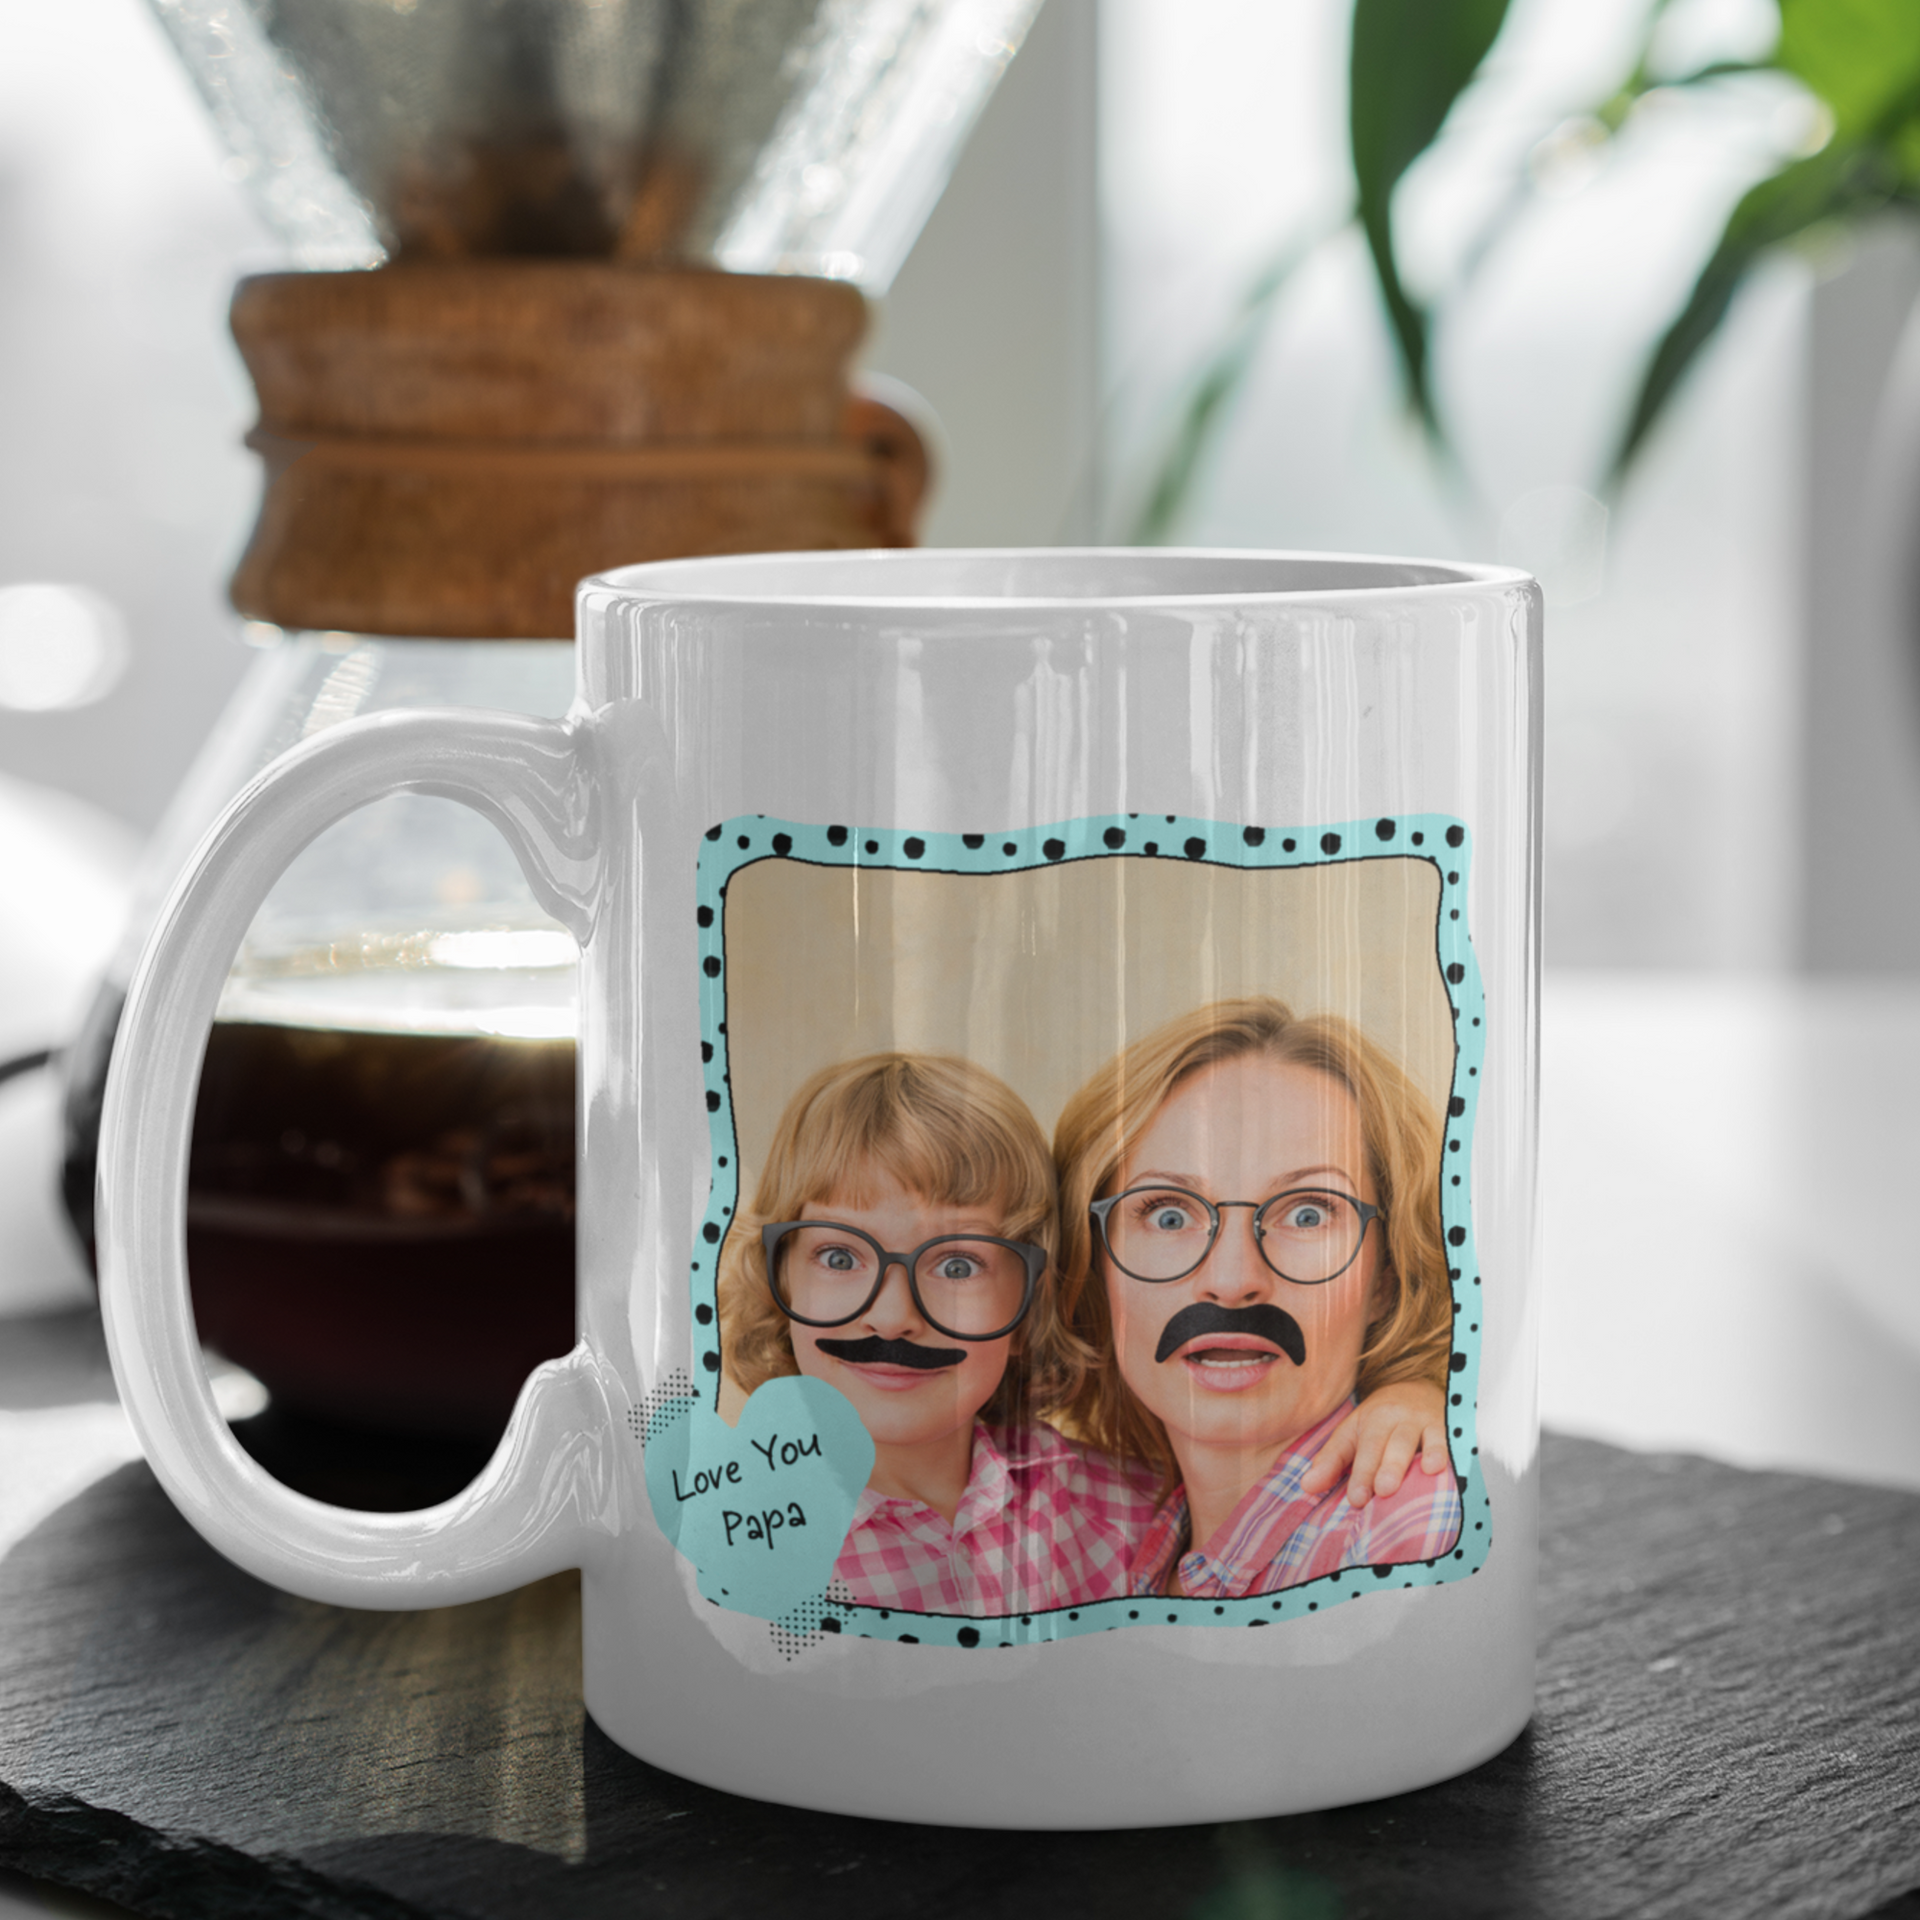 love you papa personalized photo mug gift